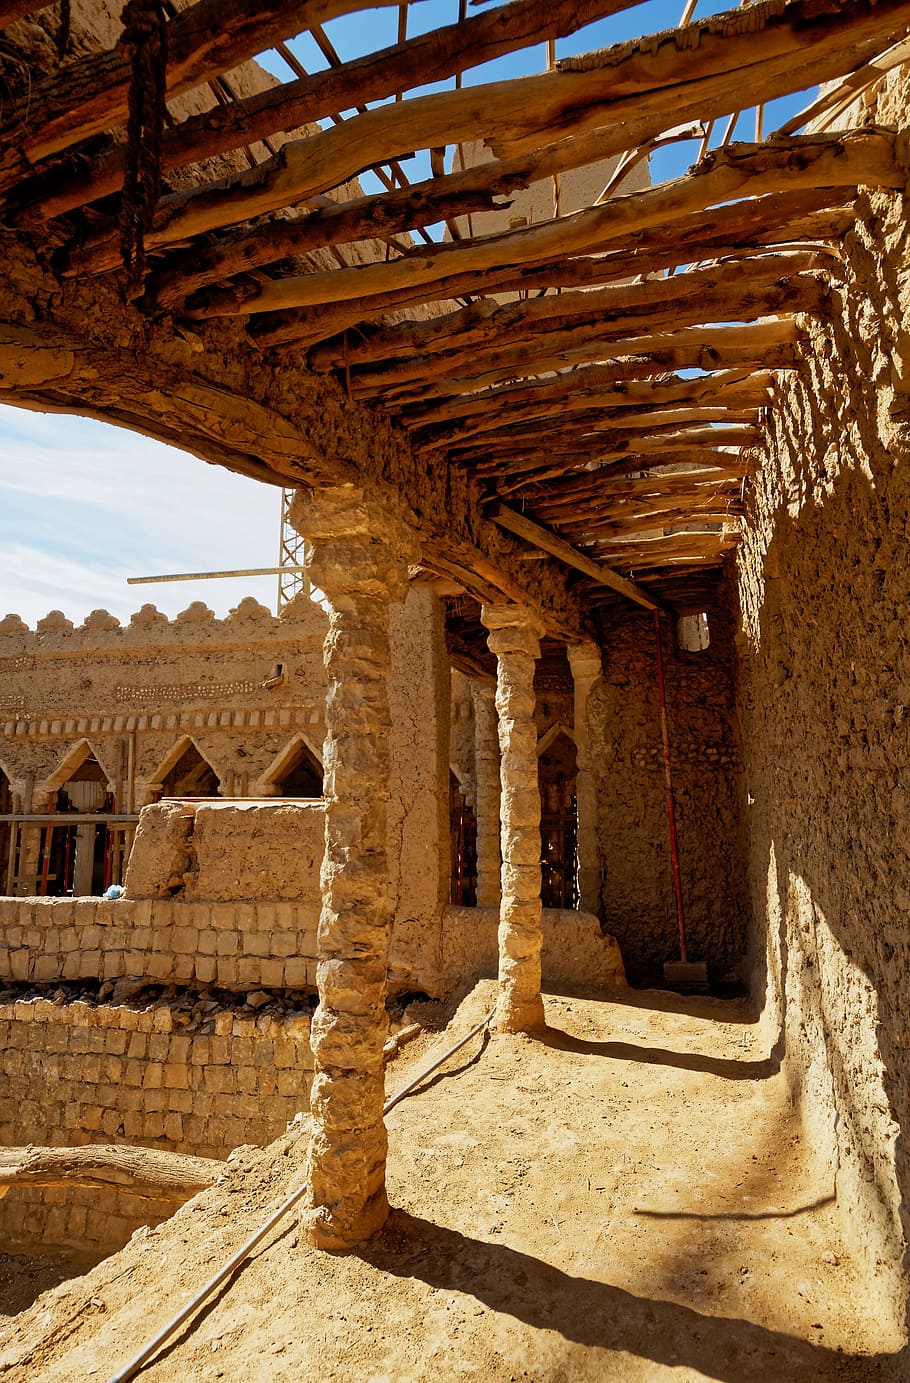 antiguo, riad, arabia saudita, históricamente, ruinas, casco antiguo, edificio, arquitectura, albañilería, ruptura